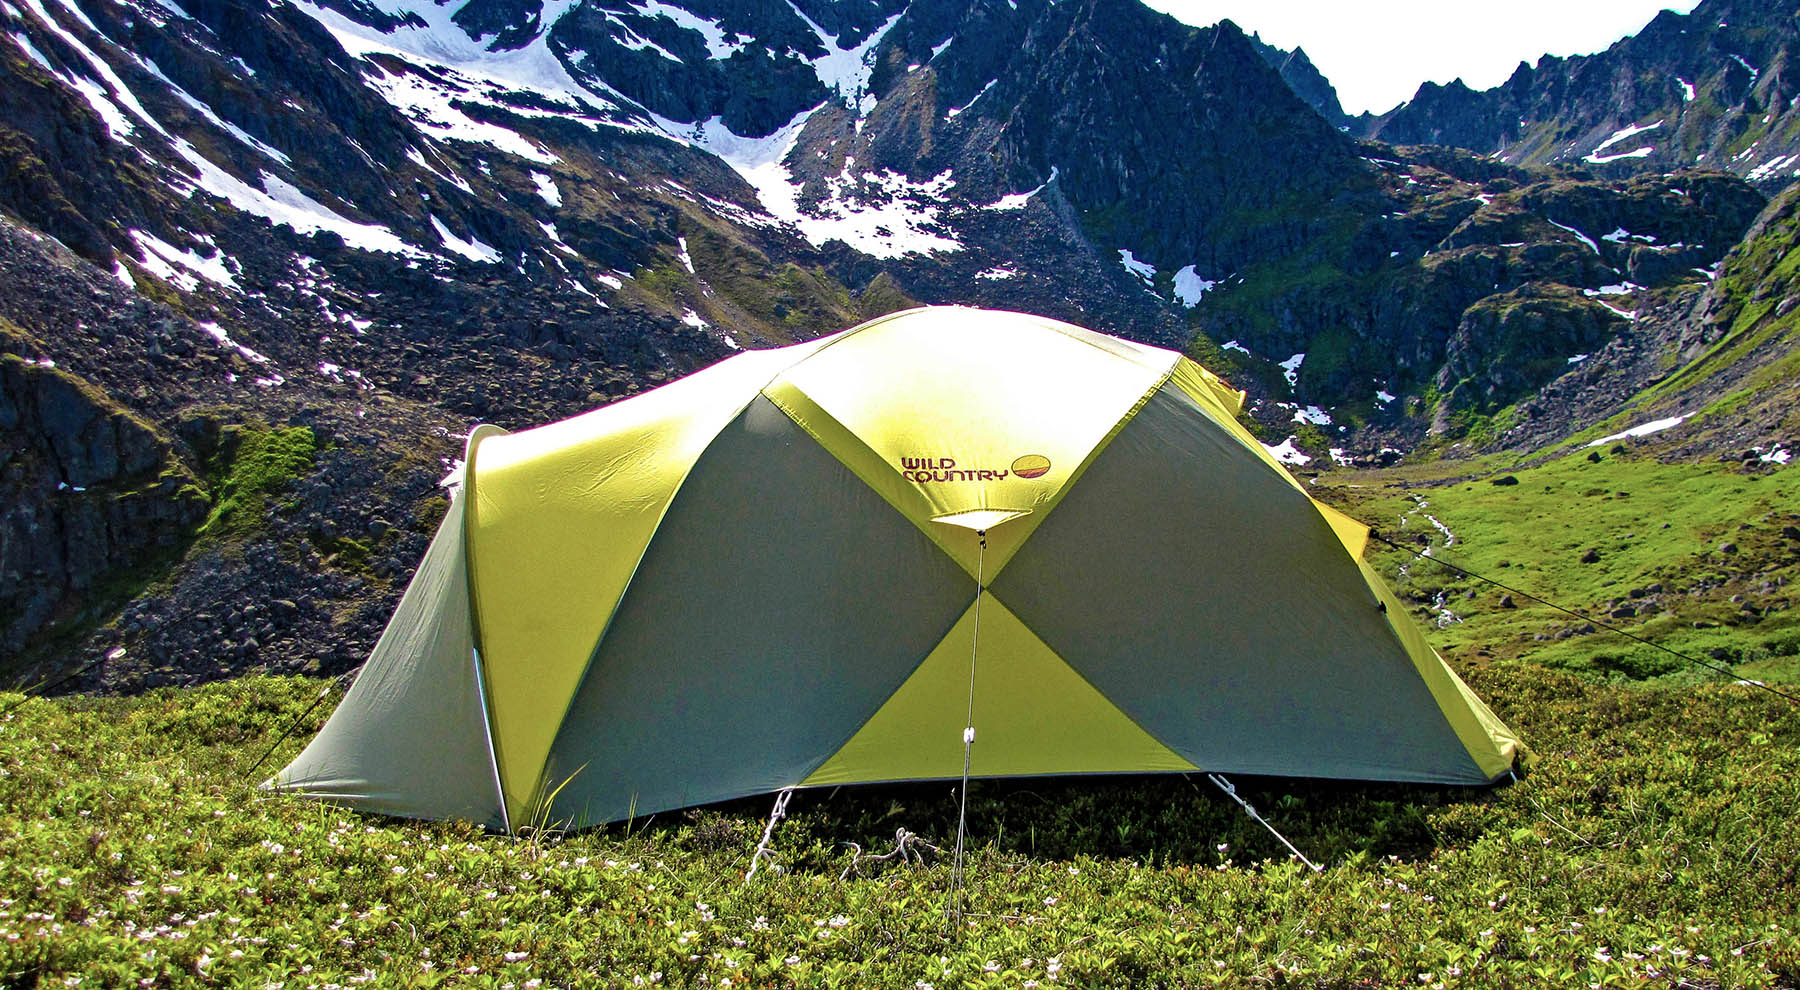 Terra Nova tent in the mountains of Alaska